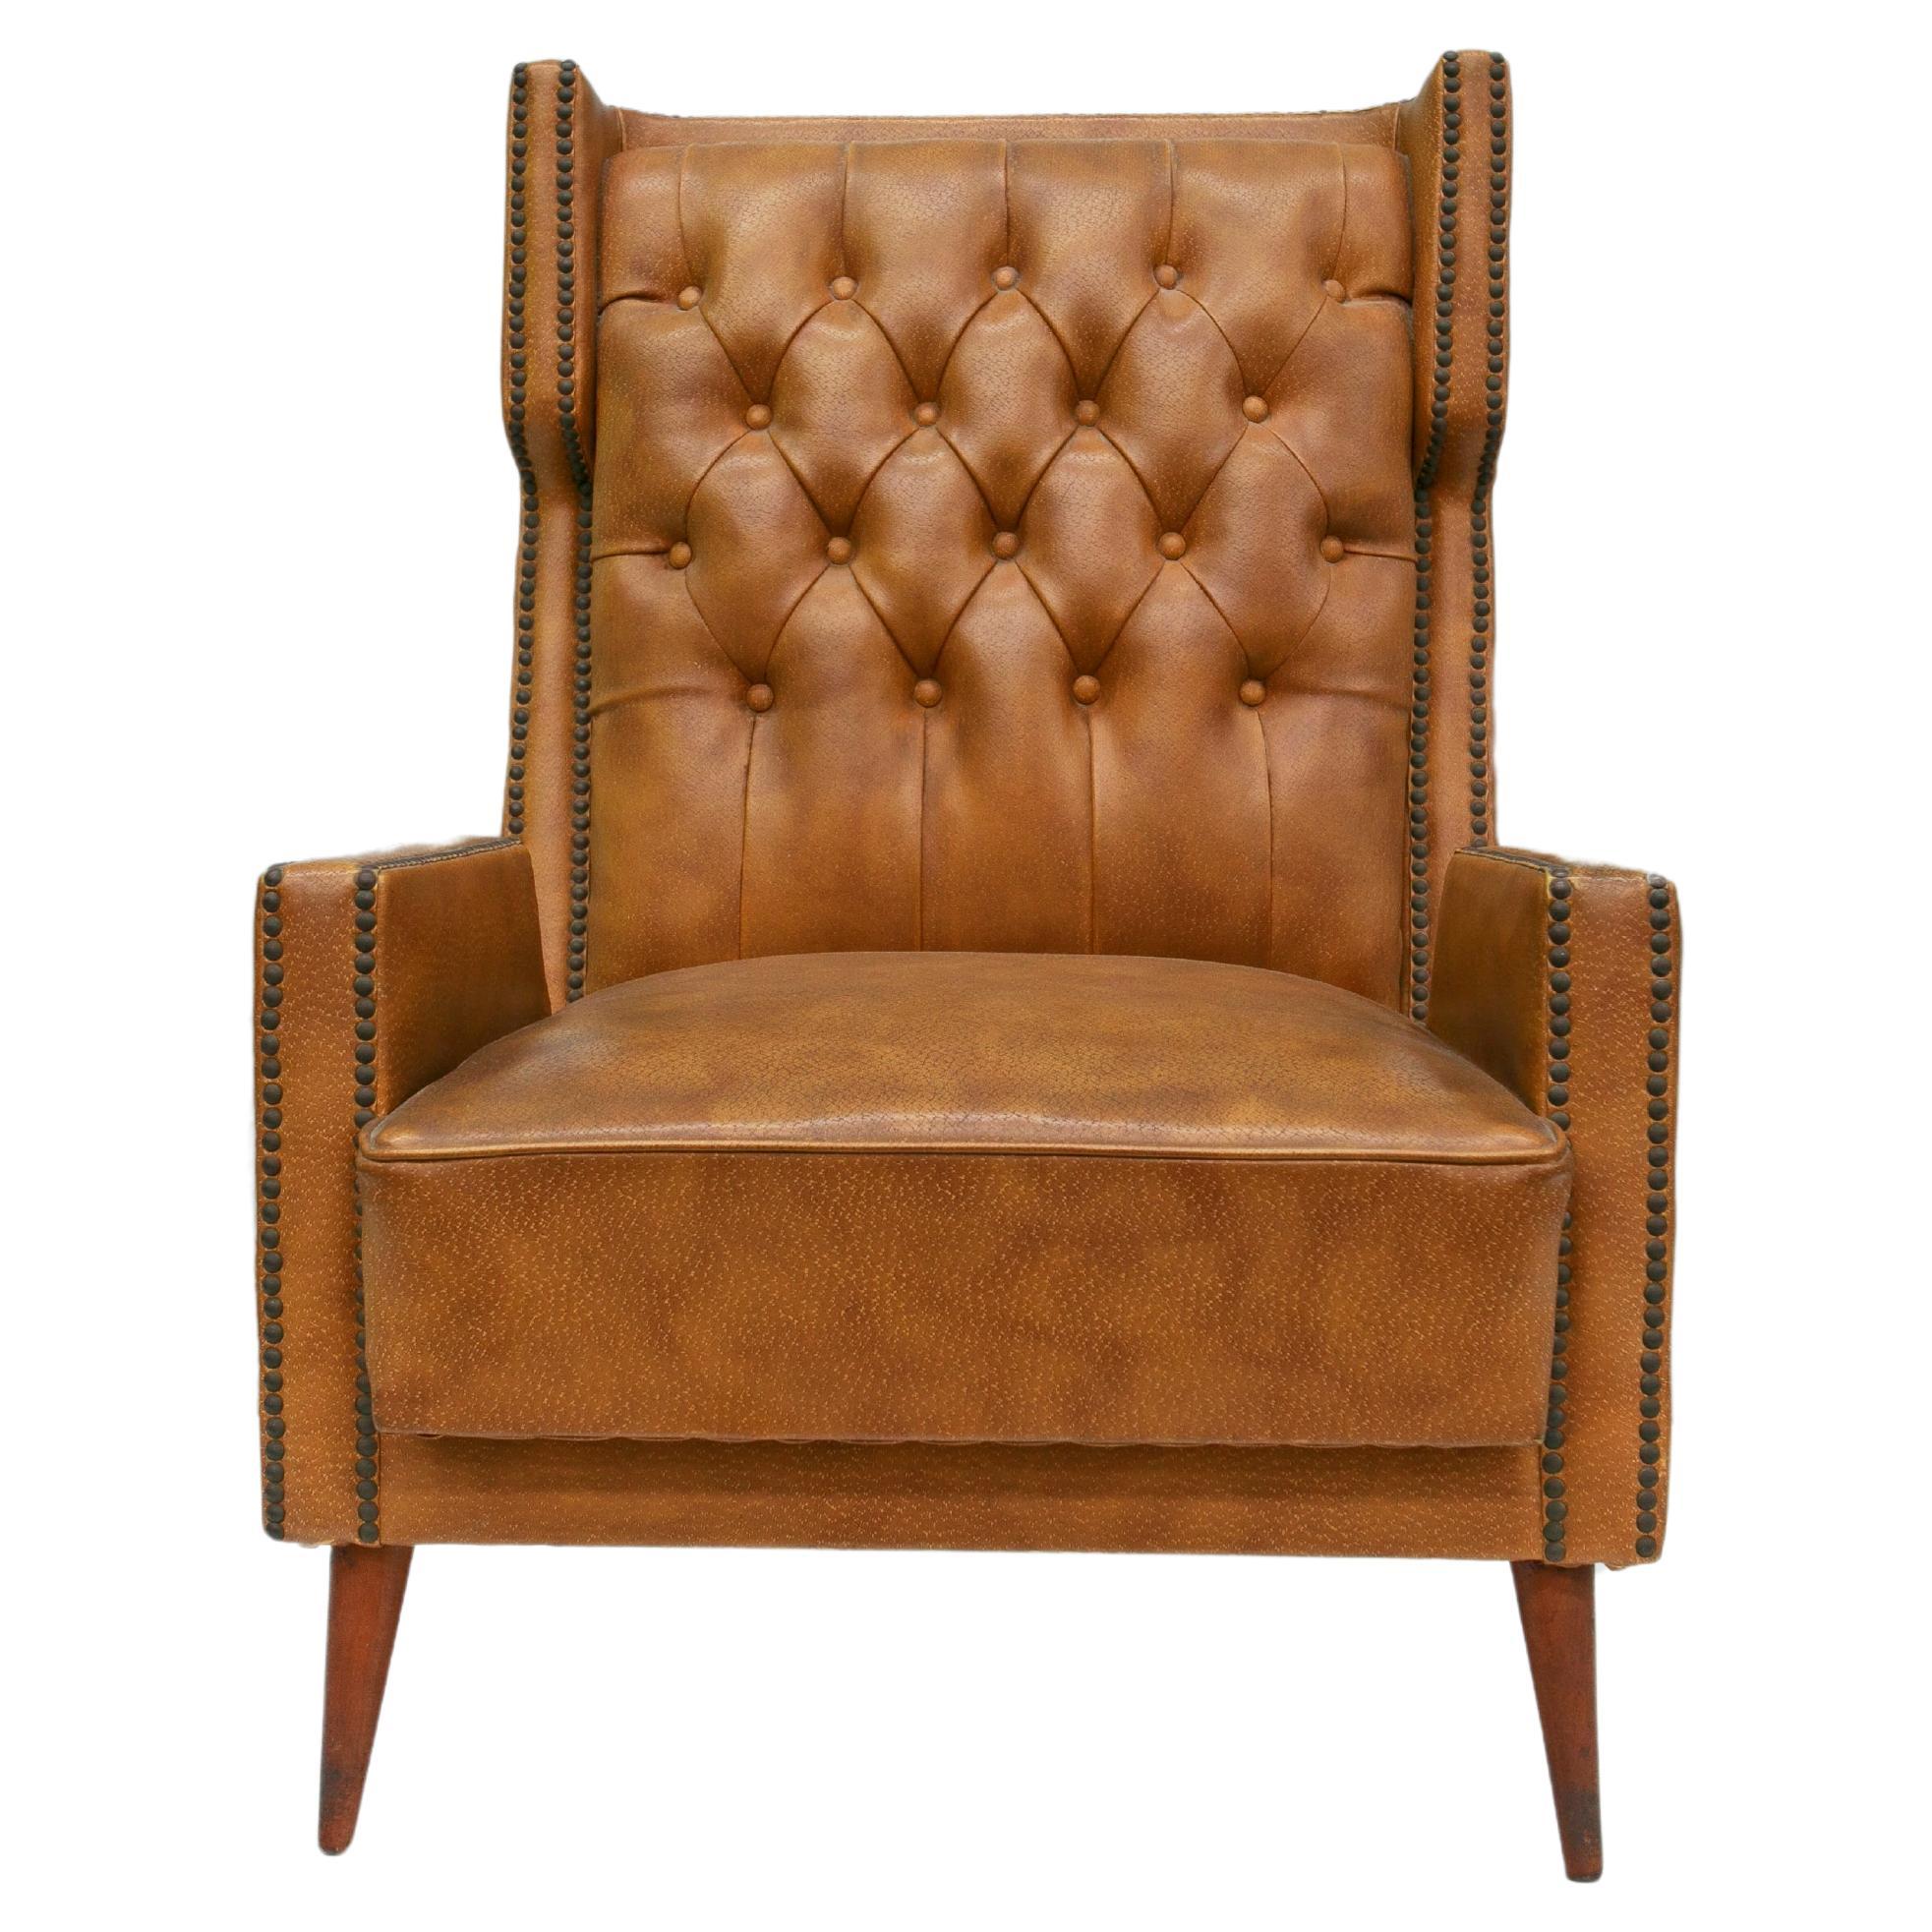 Brasilianischer moderner Sessel aus Hartholz, braunes Leder, G. Scapinelli, 1950er Jahre im Angebot